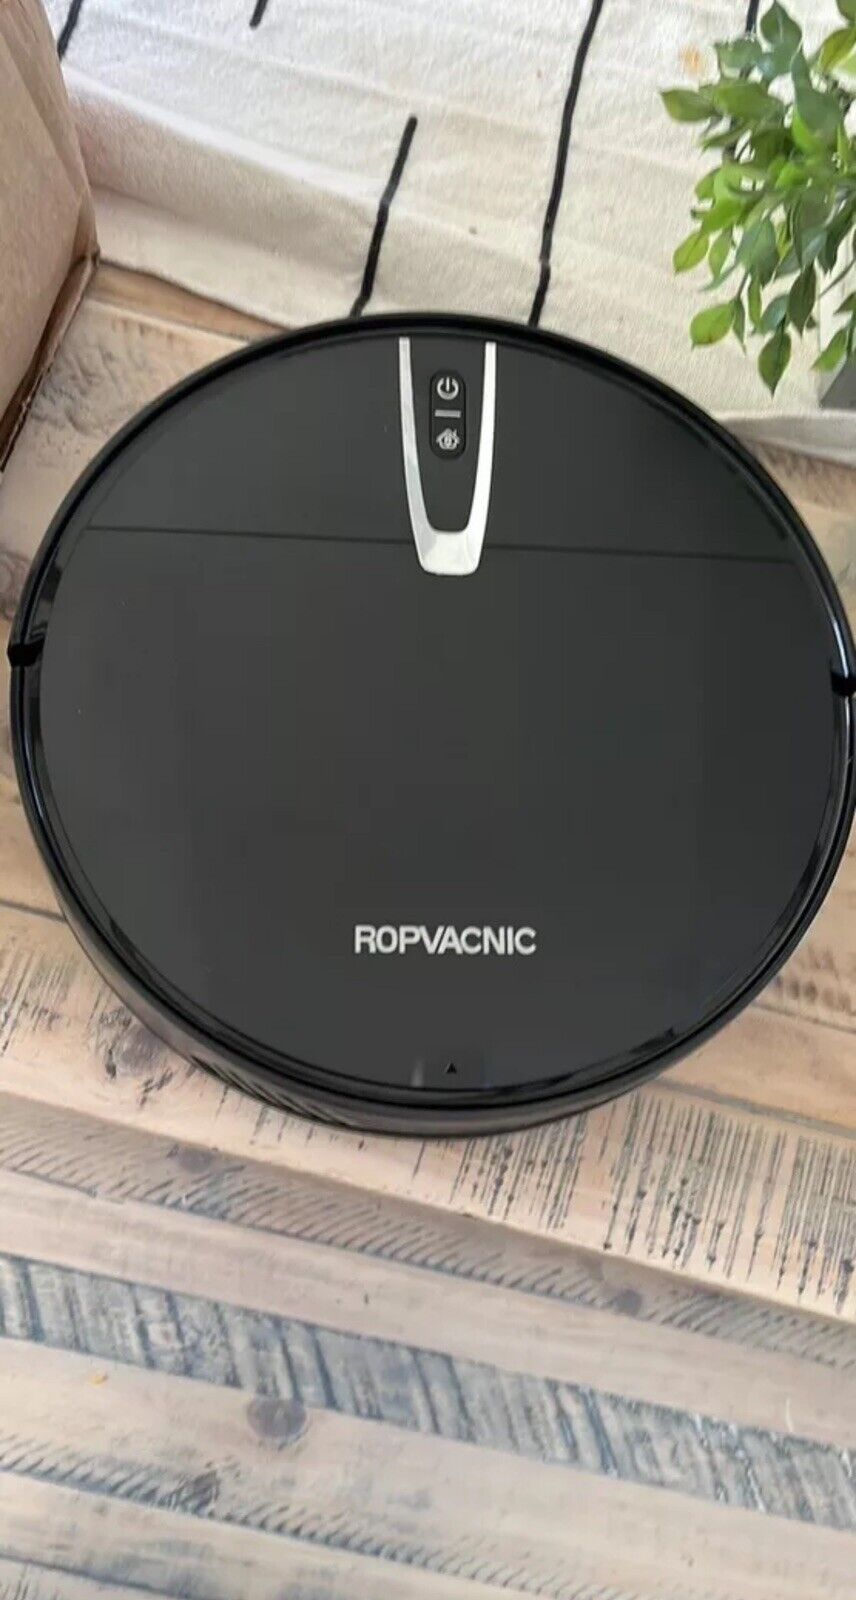 Ropvanic A1 Self-Charging Robot Vacuum Cleaner